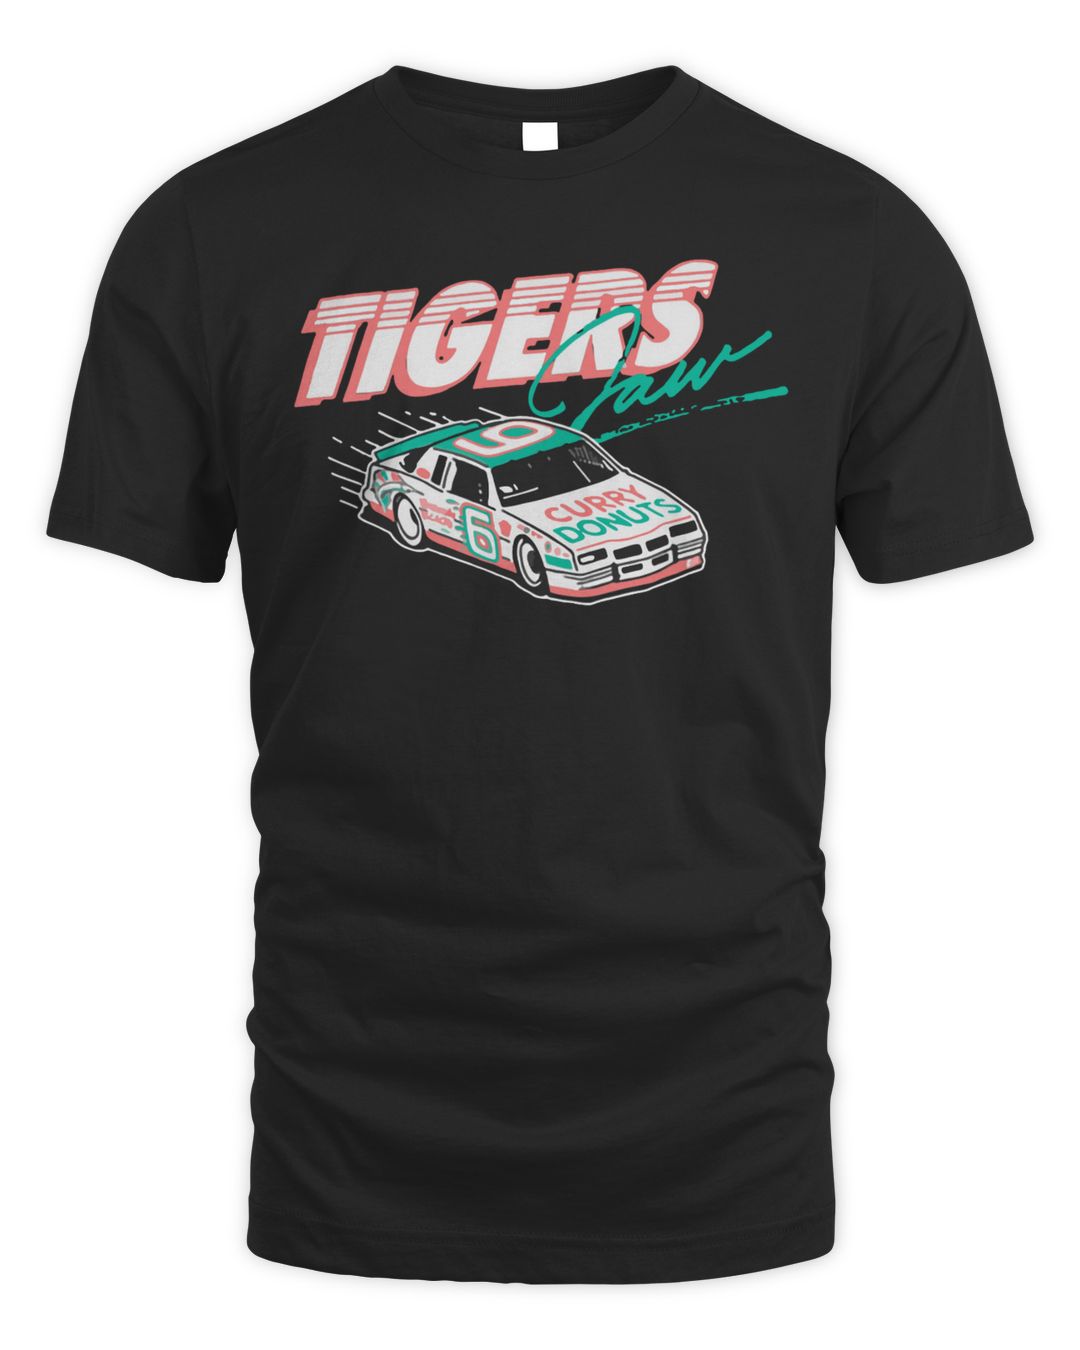 Tigers Jaw Merch Hinkley Racing Shirt